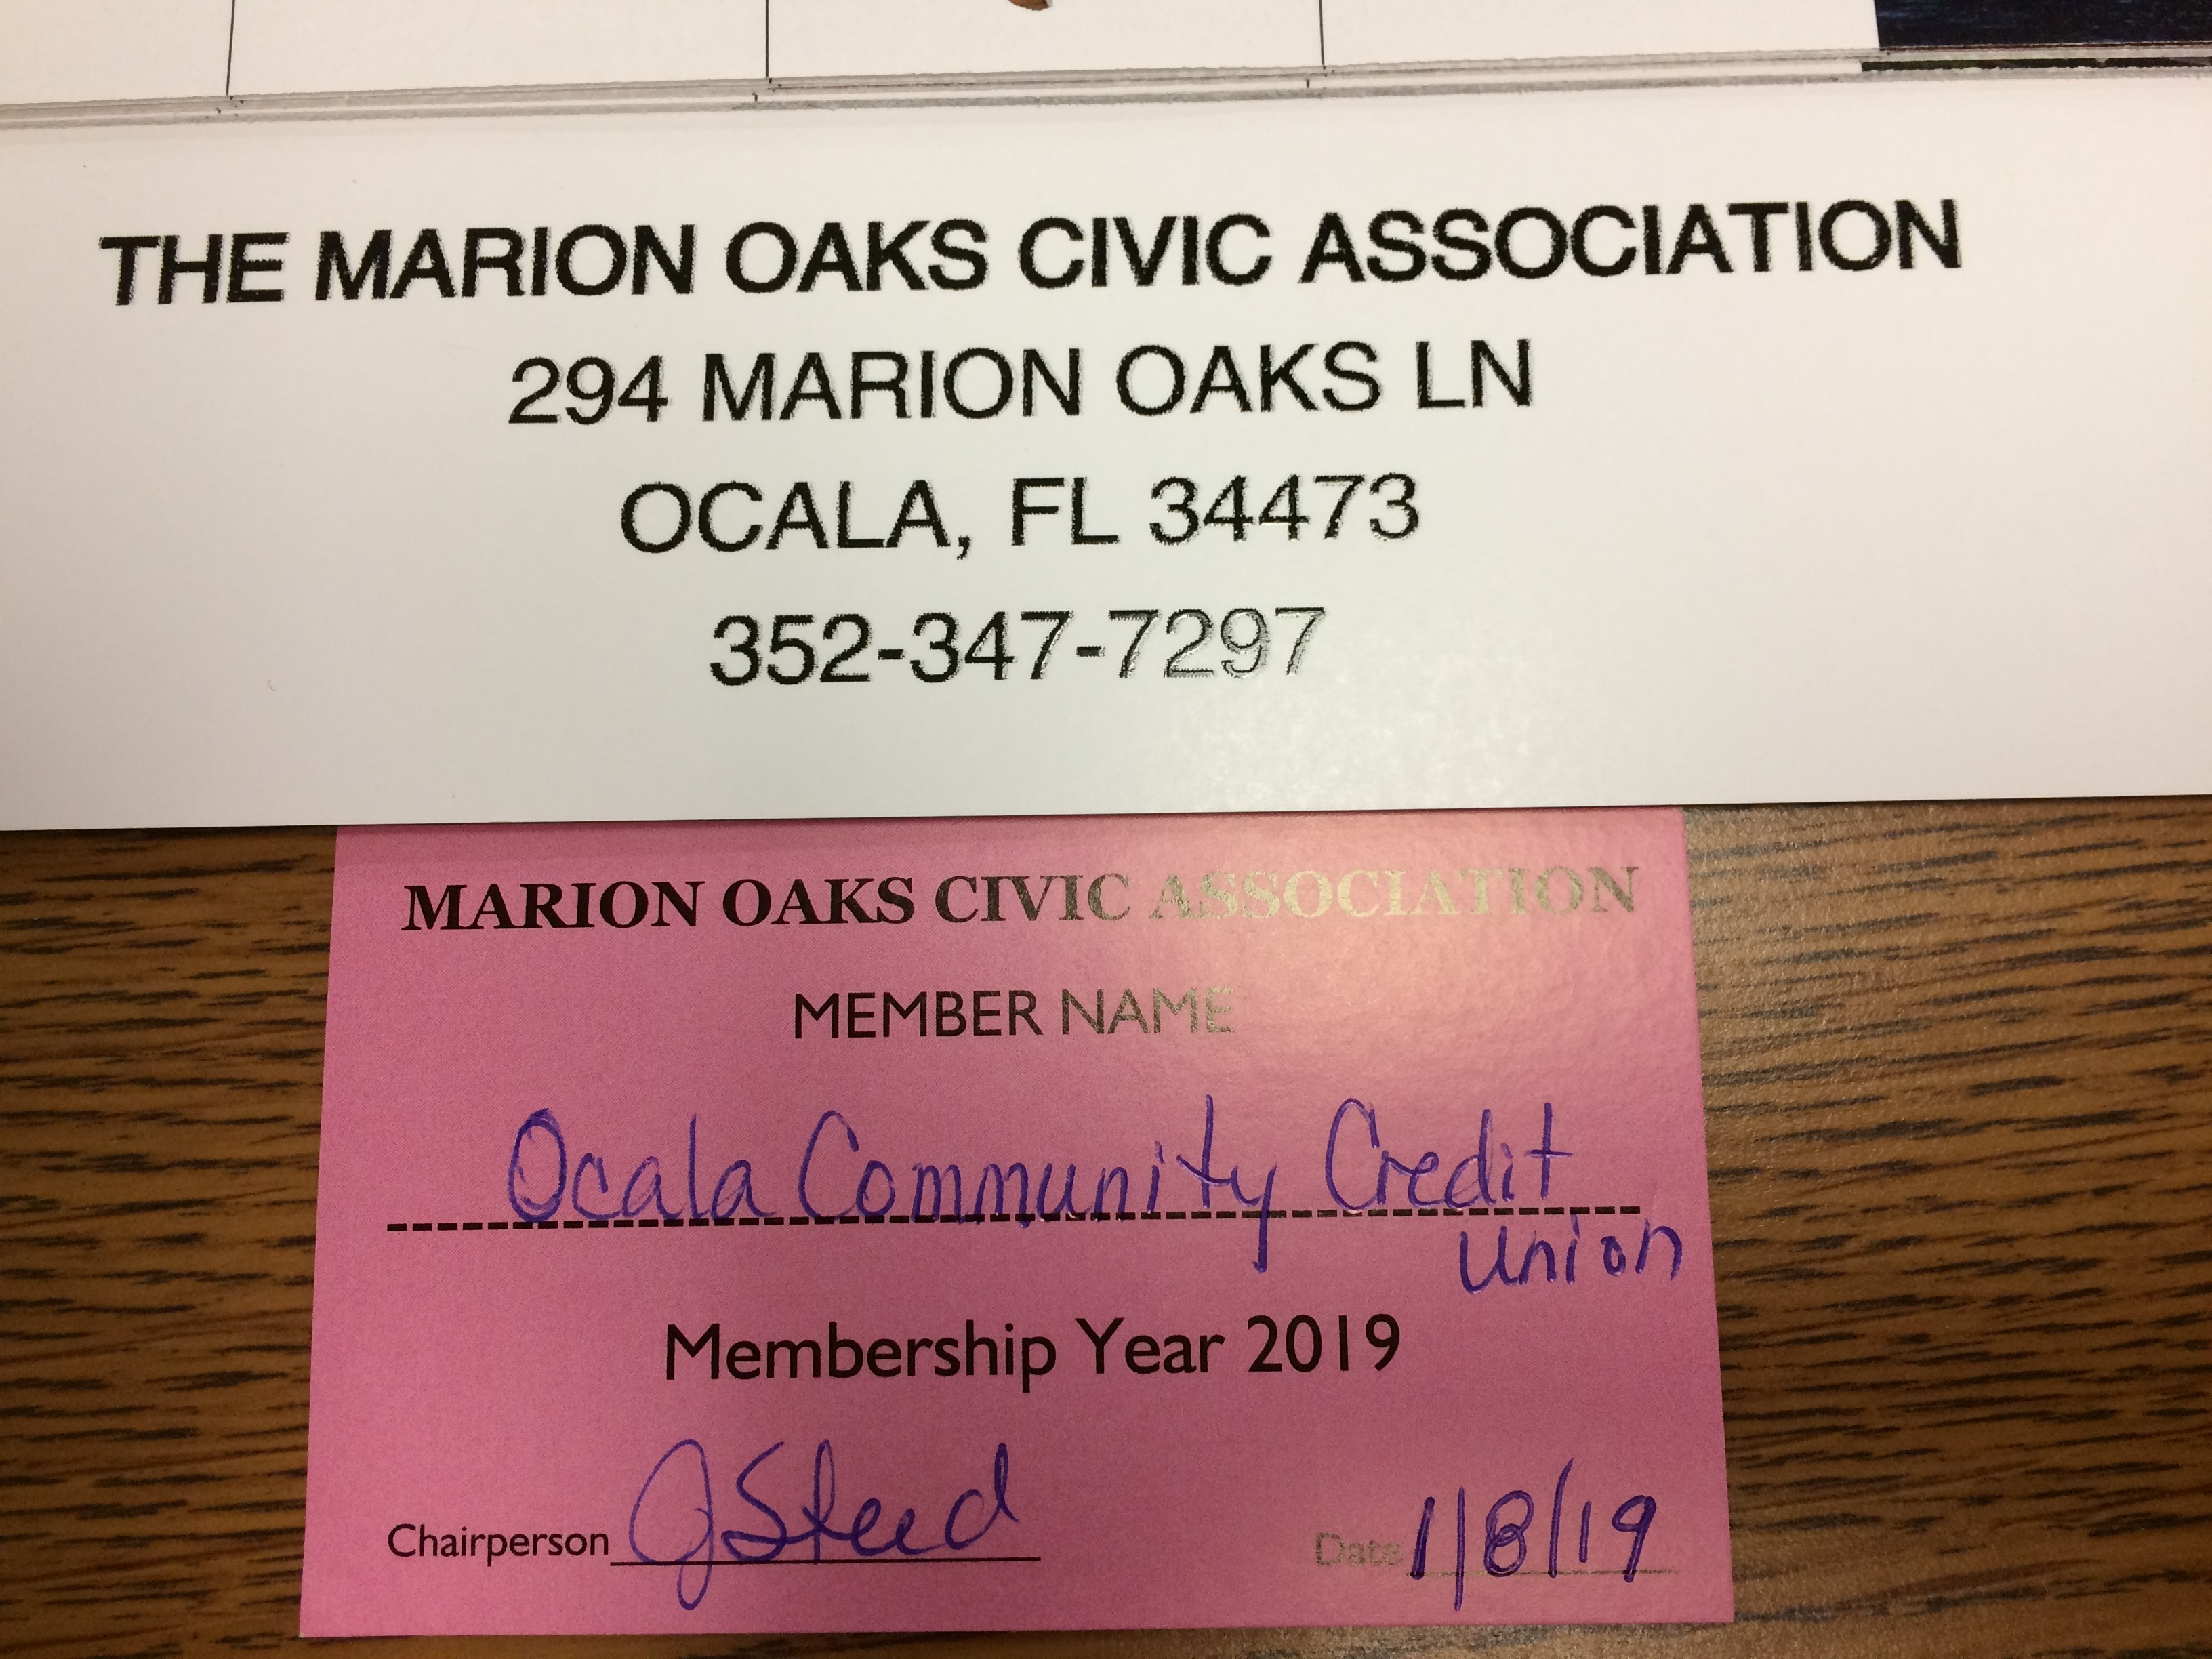 01-08-2018 The Marion Oaks Civic Association - OCCU Member